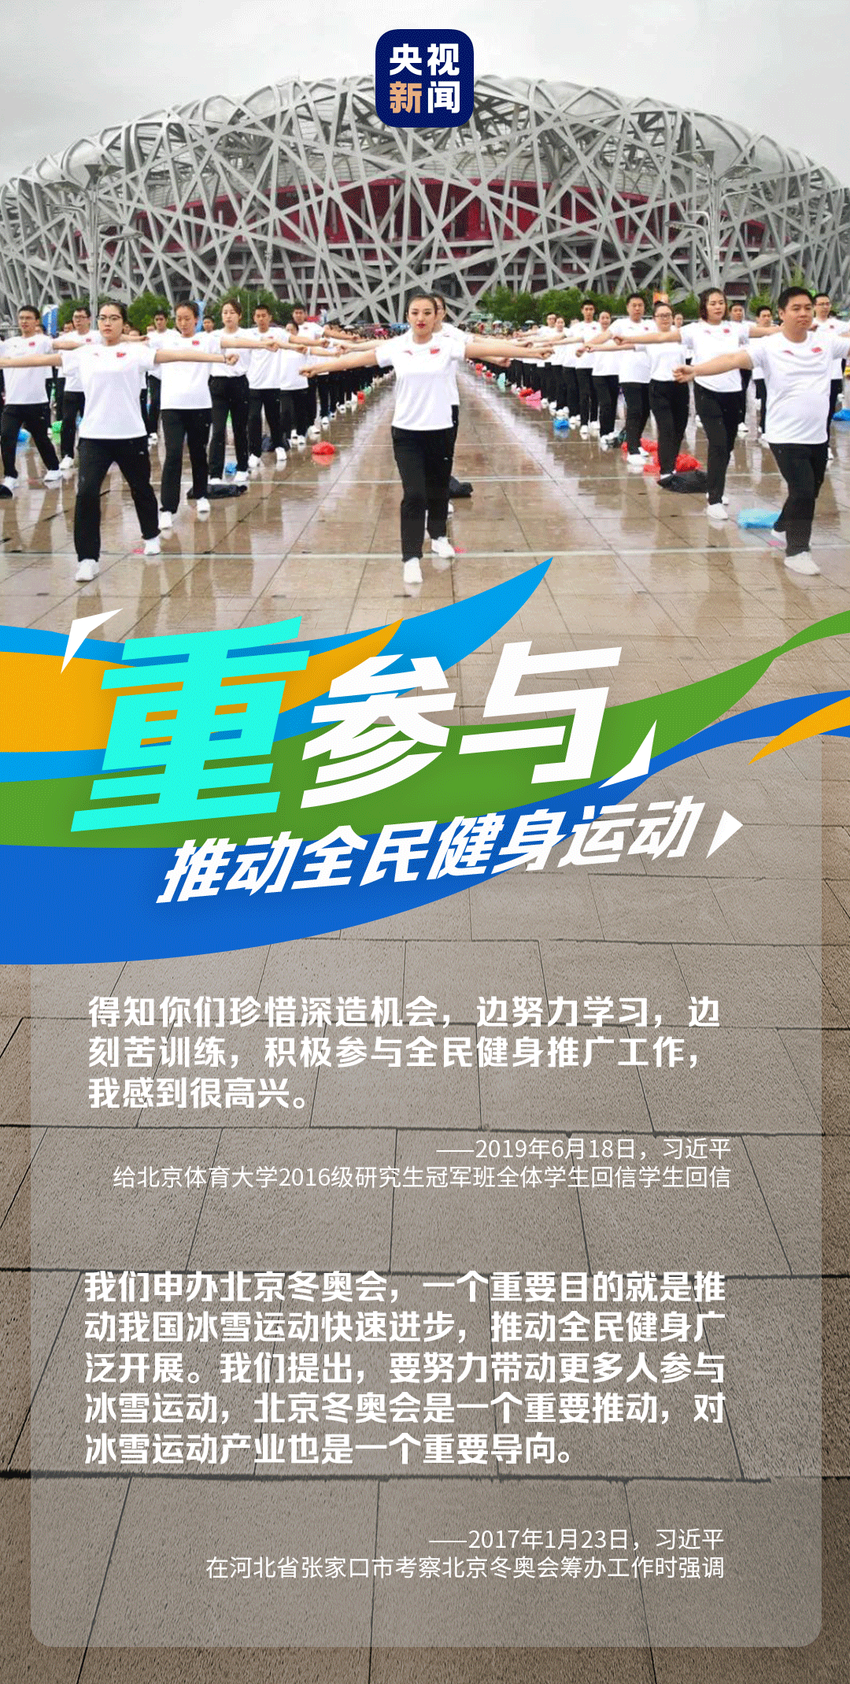 Hari Olahraga Nasional, Xi Jinping Serukan Masyarakat Rajin Berolahraga demi Rajin Bekerja_fororder_kc4